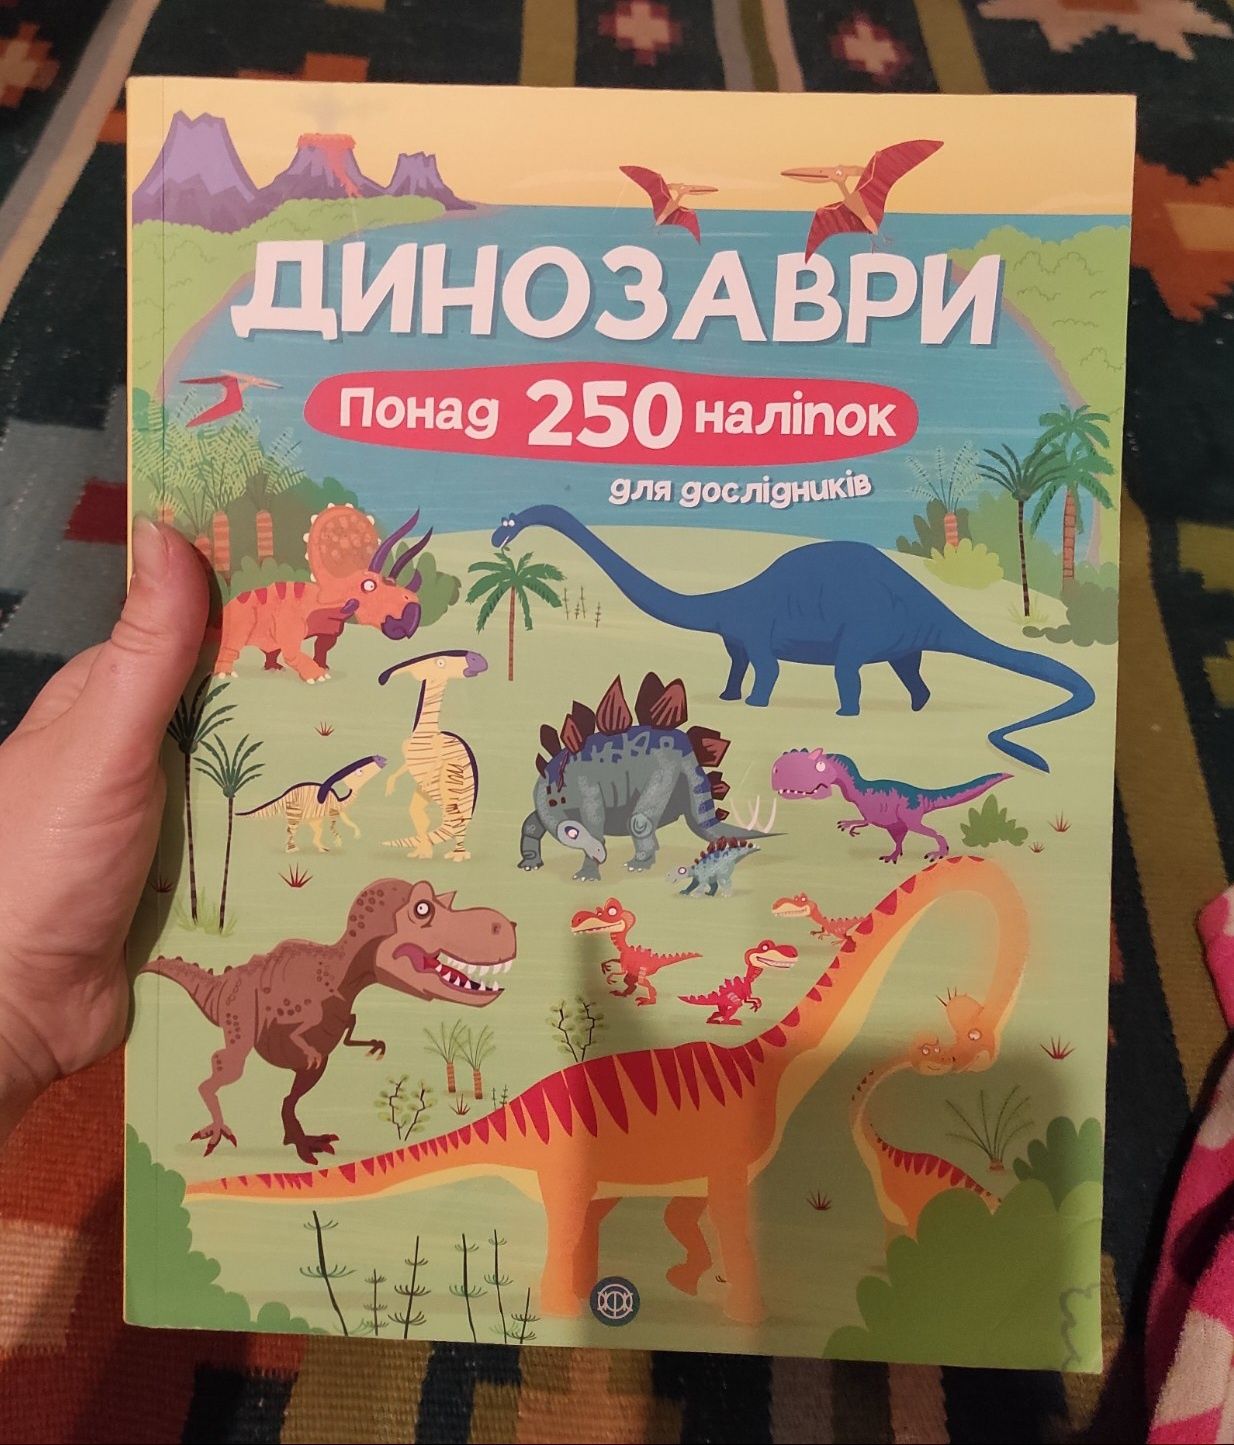 Дитячі книжки, детские книги. Сказки, казки, динозавры, наліпки